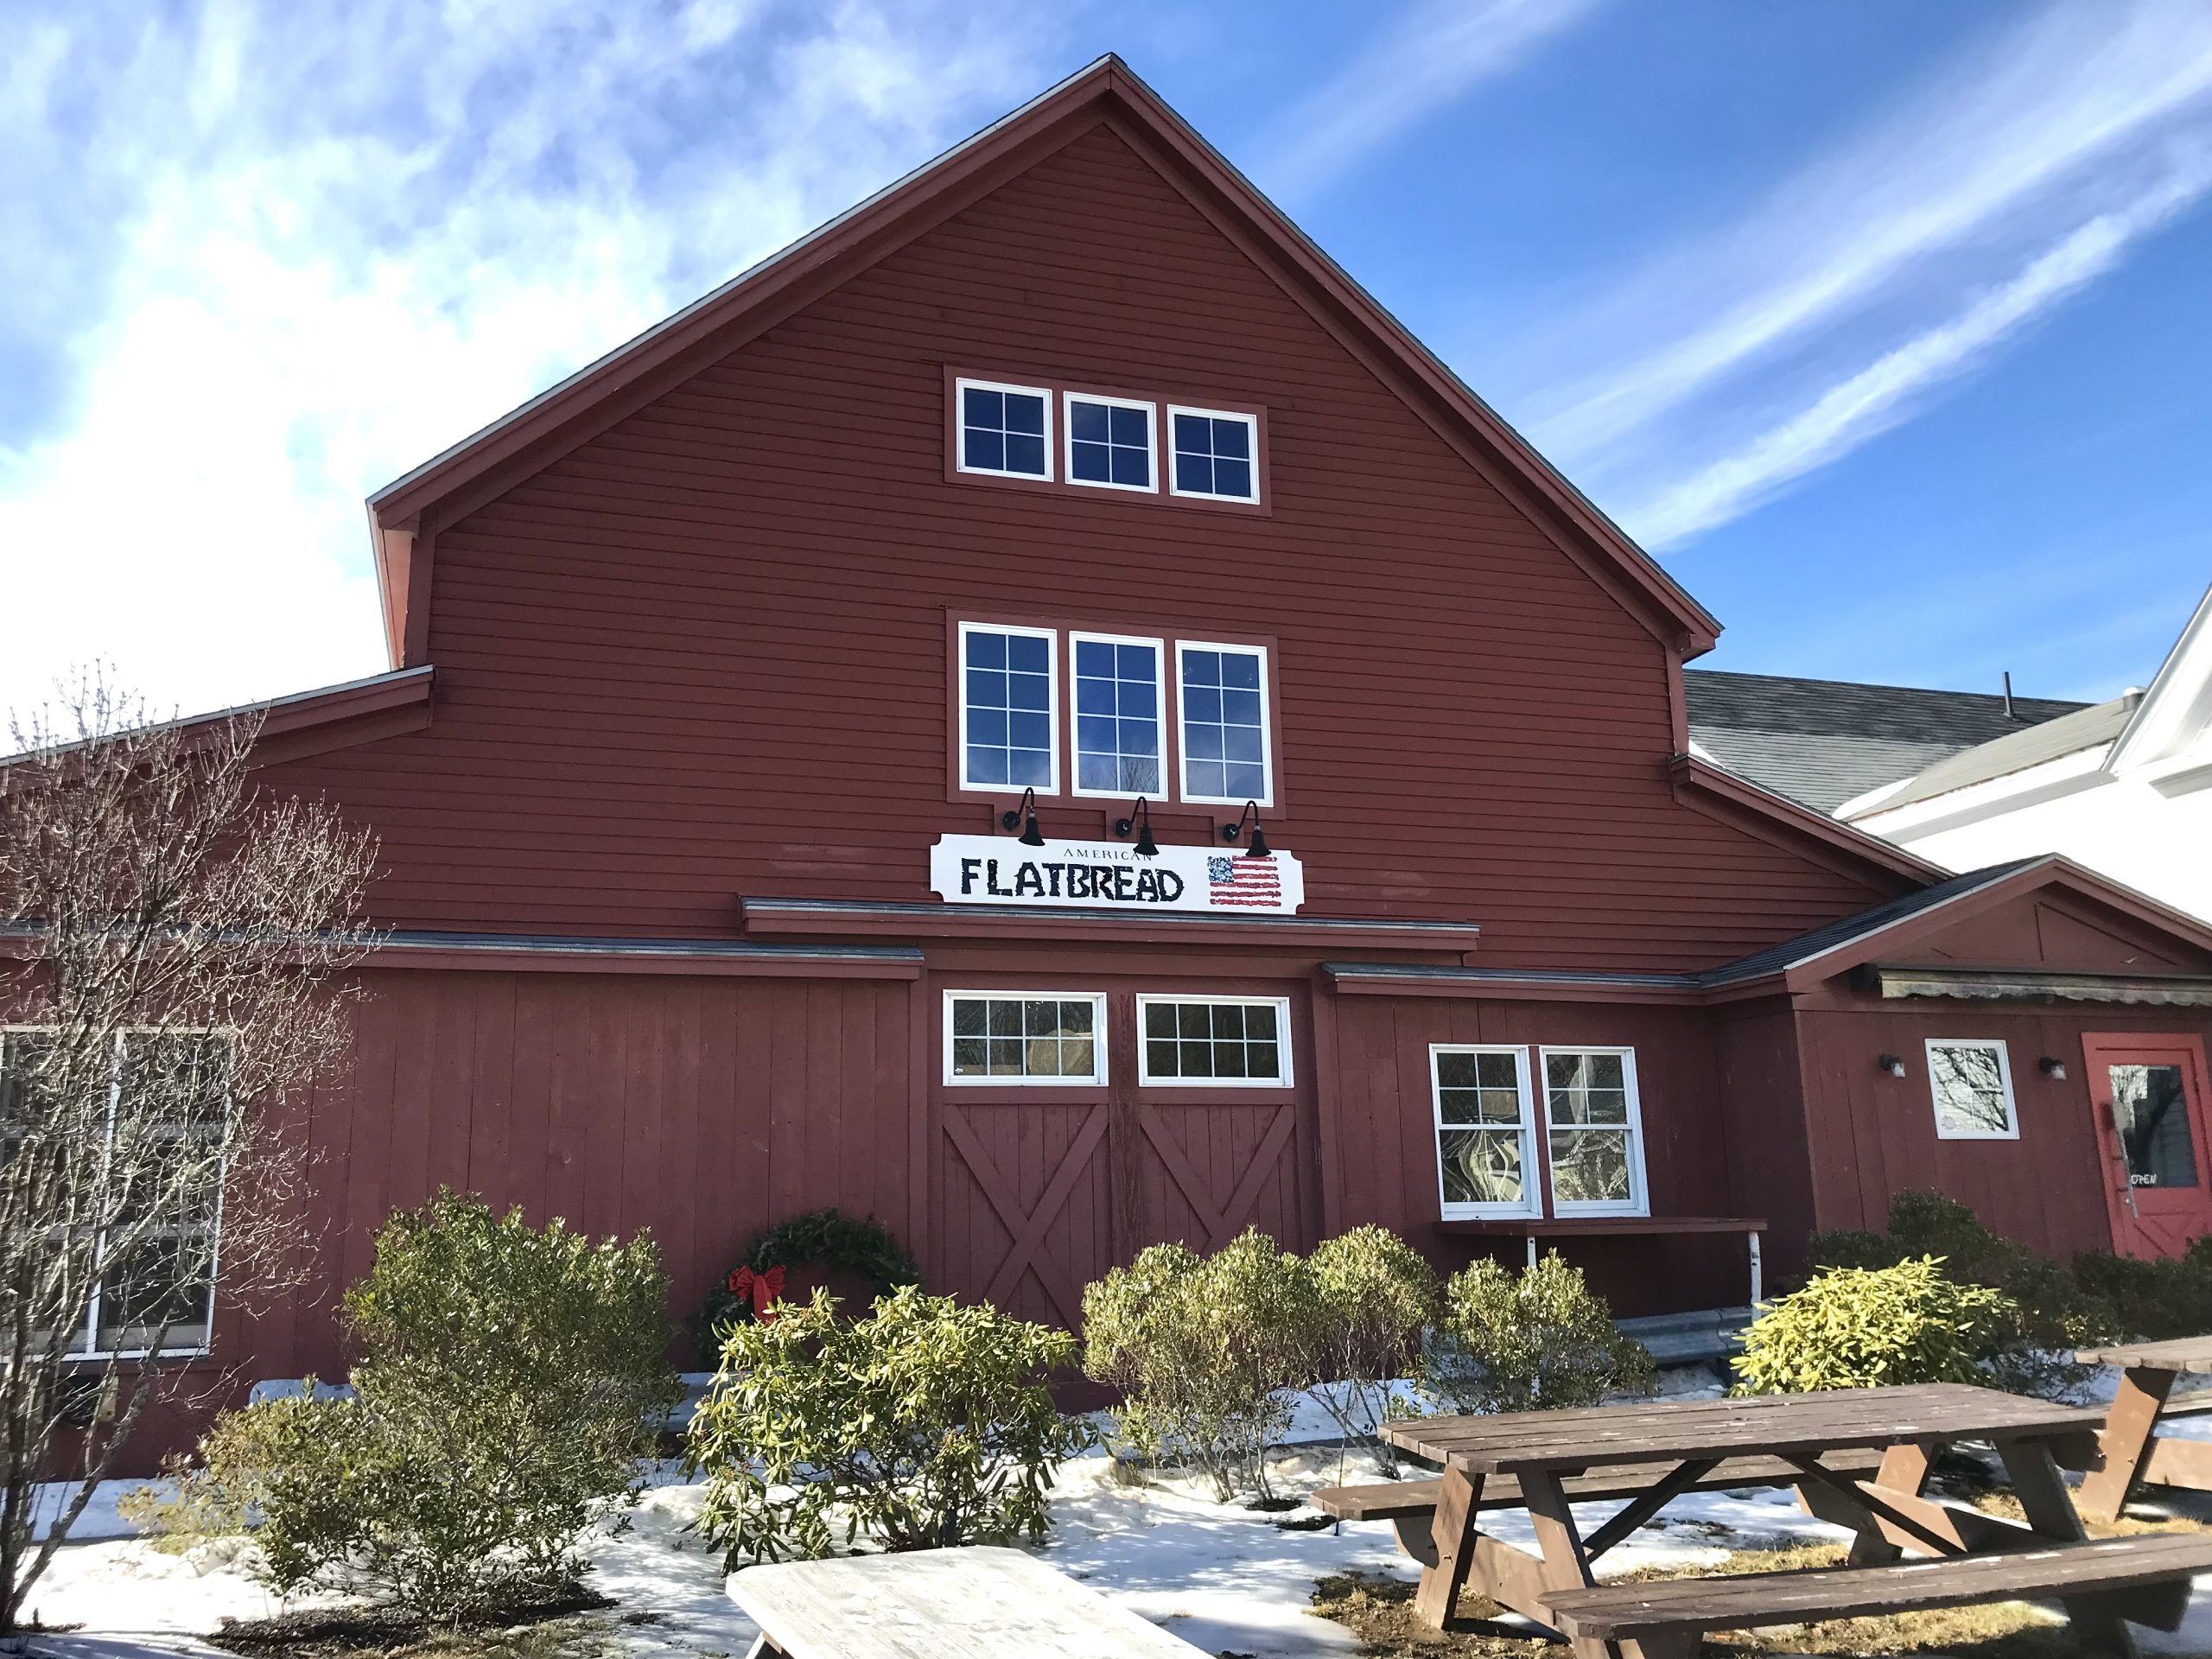 American Flatbread Company in Rockport, Maine